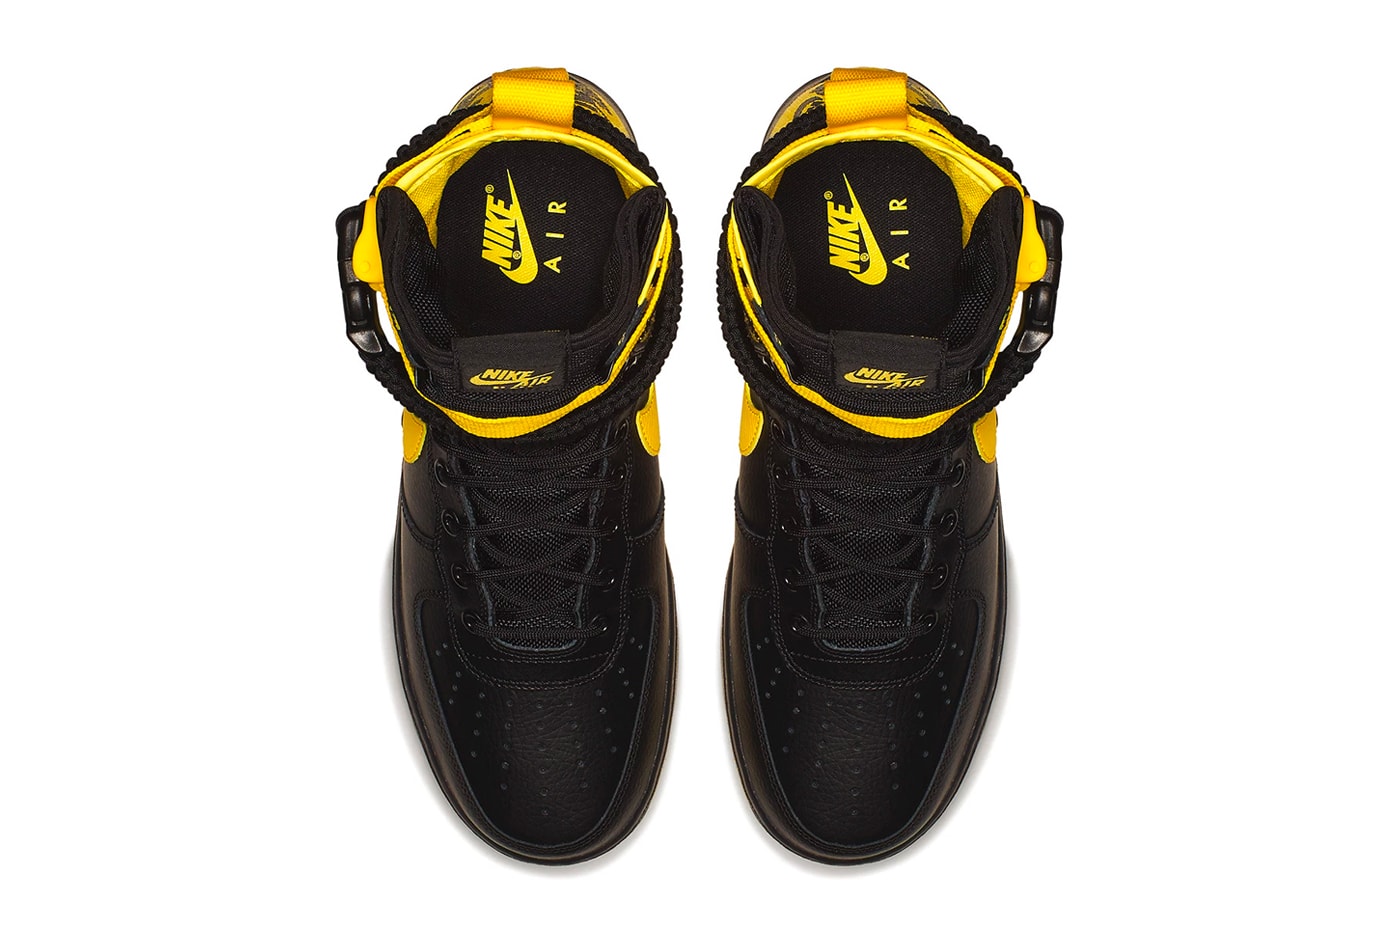 Nike SF-AF1 High Black Dynamic Yellow leather ballistic nylon sneakers footwear